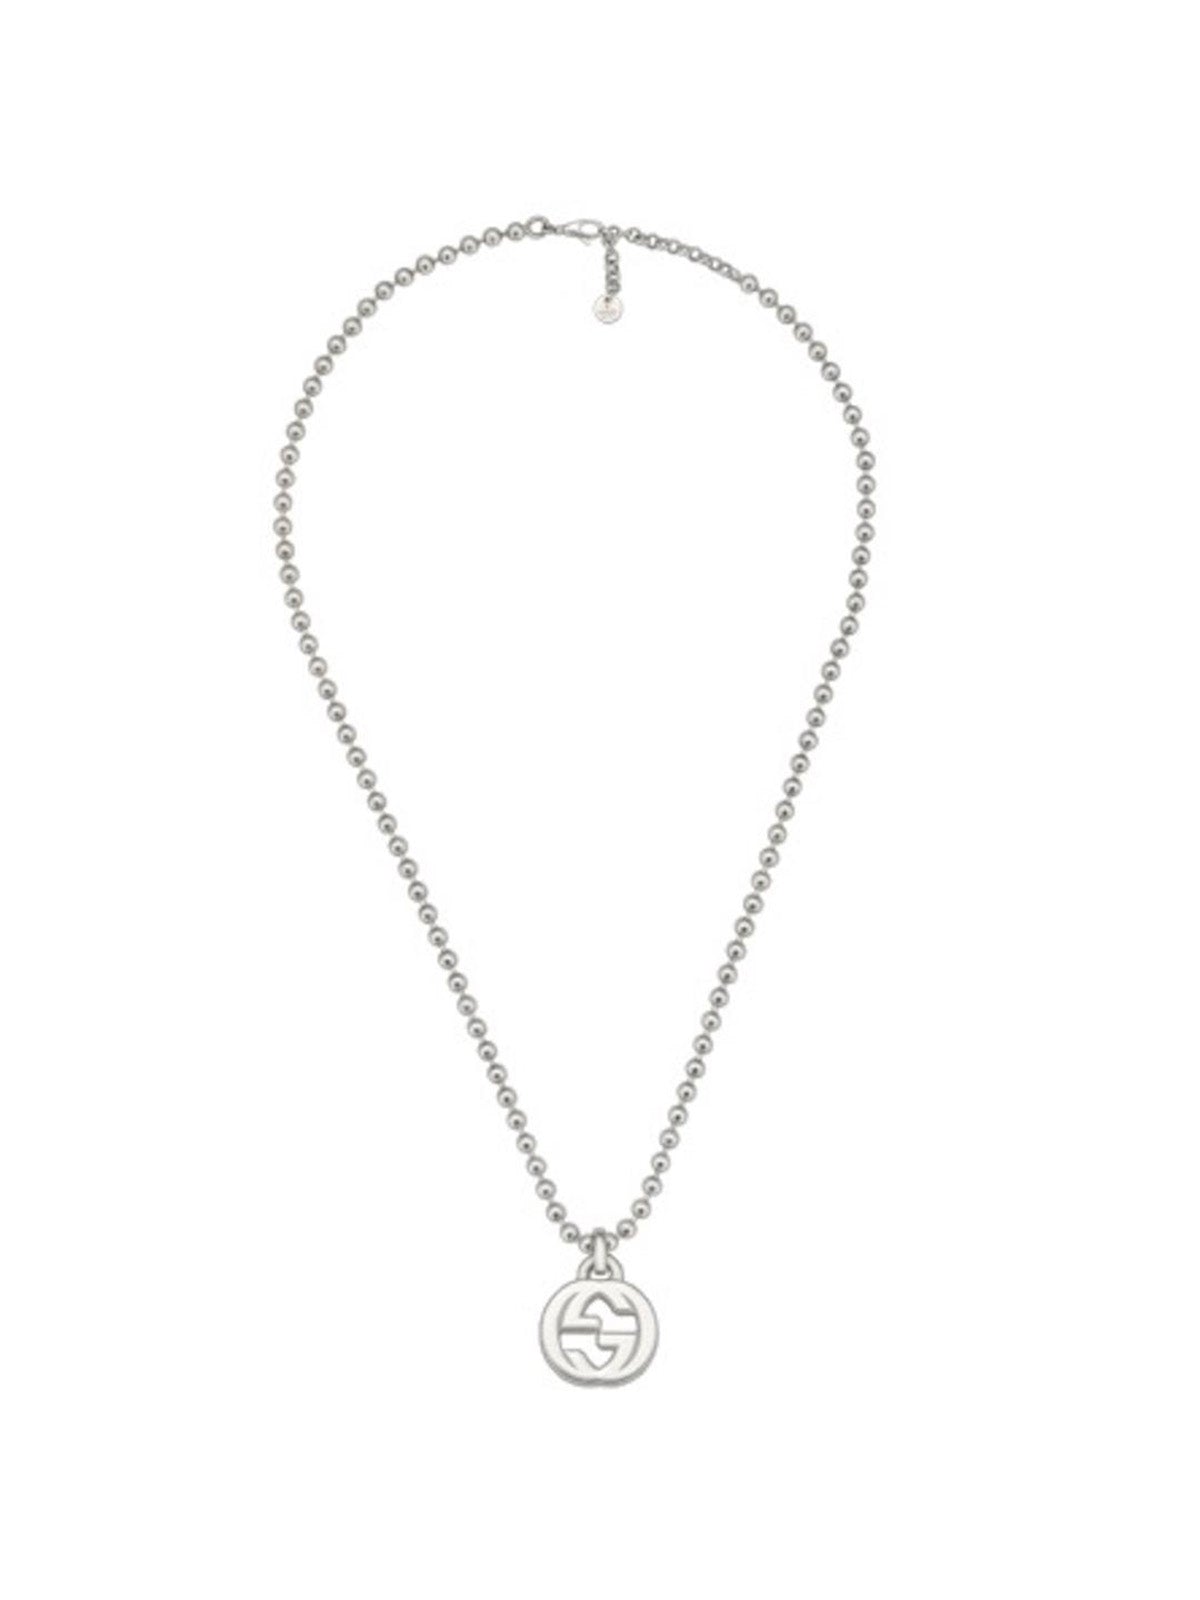 Gucci Interlocking G Necklace in Silver 55cm